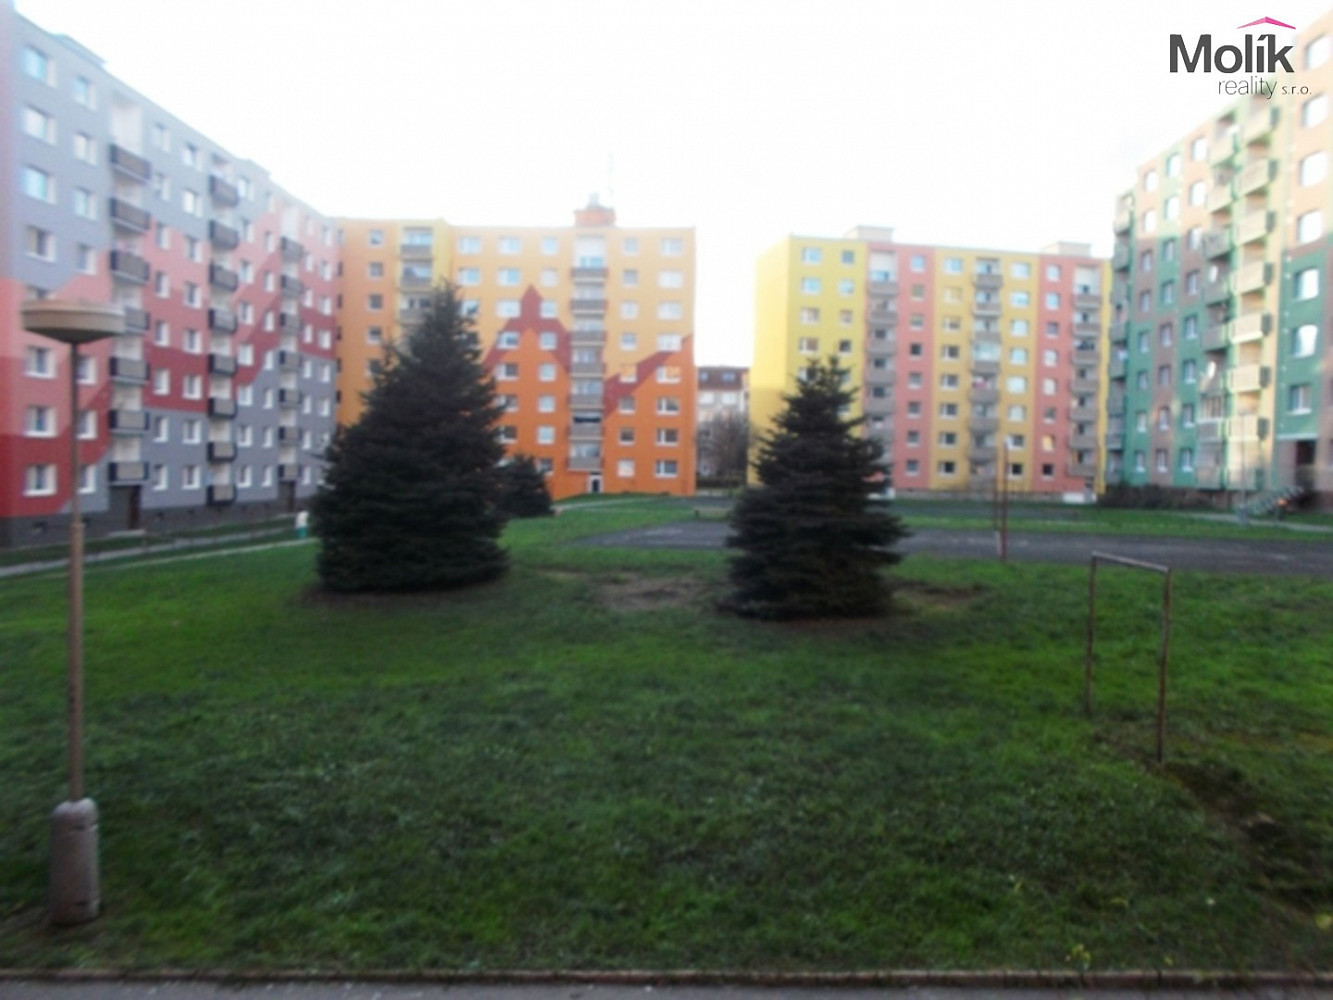 Jirkov, okres Chomutov